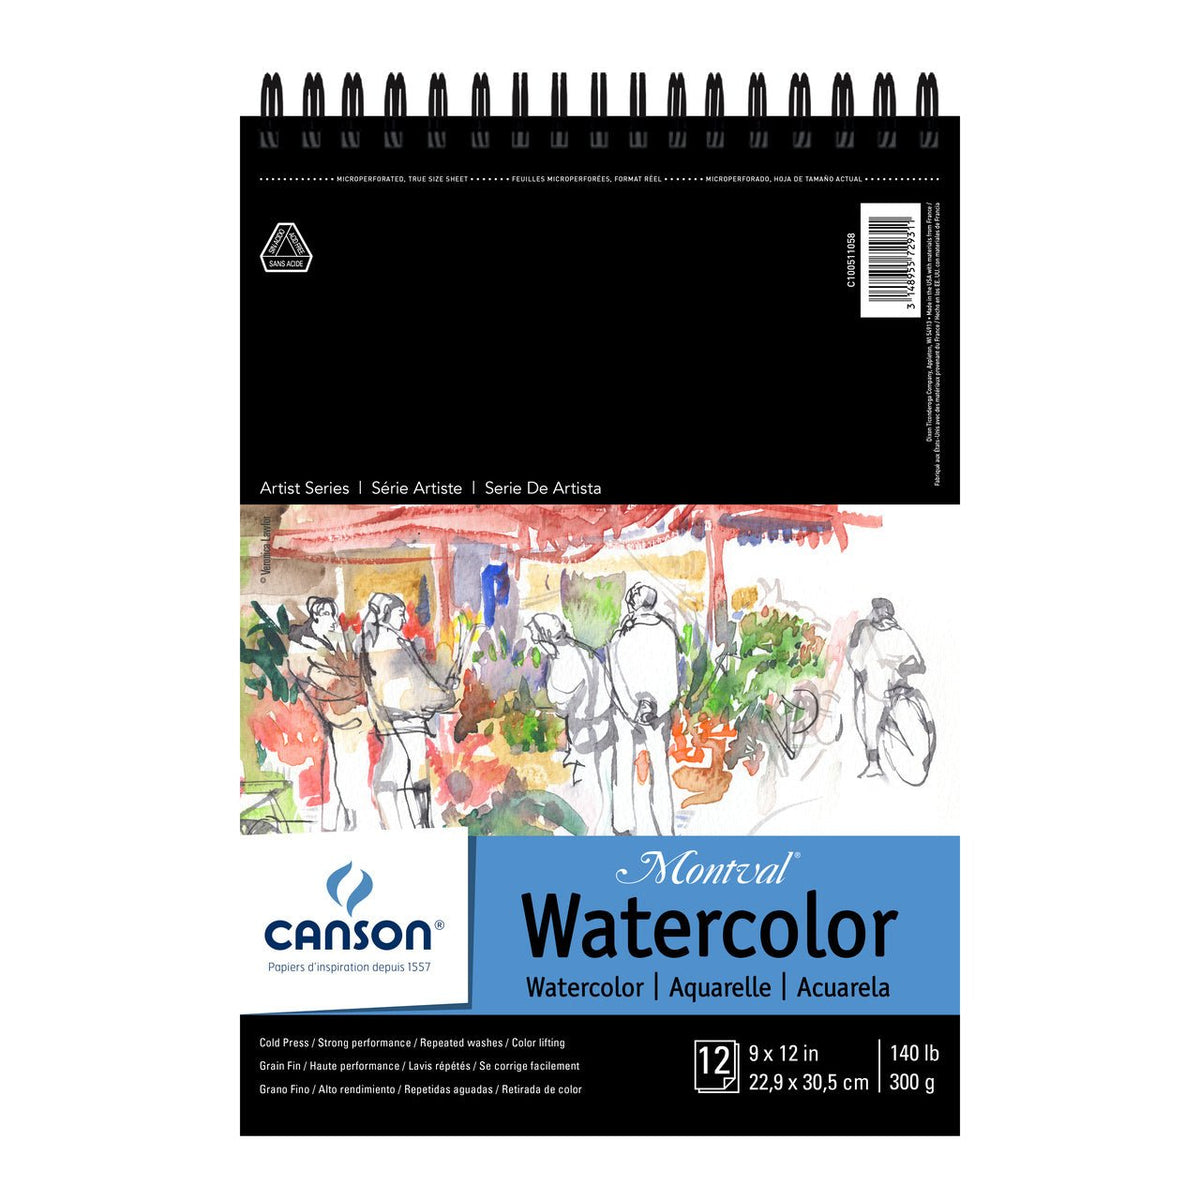 Canson Montval 140 lb. Watercolor pad 9x12 - merriartist.com